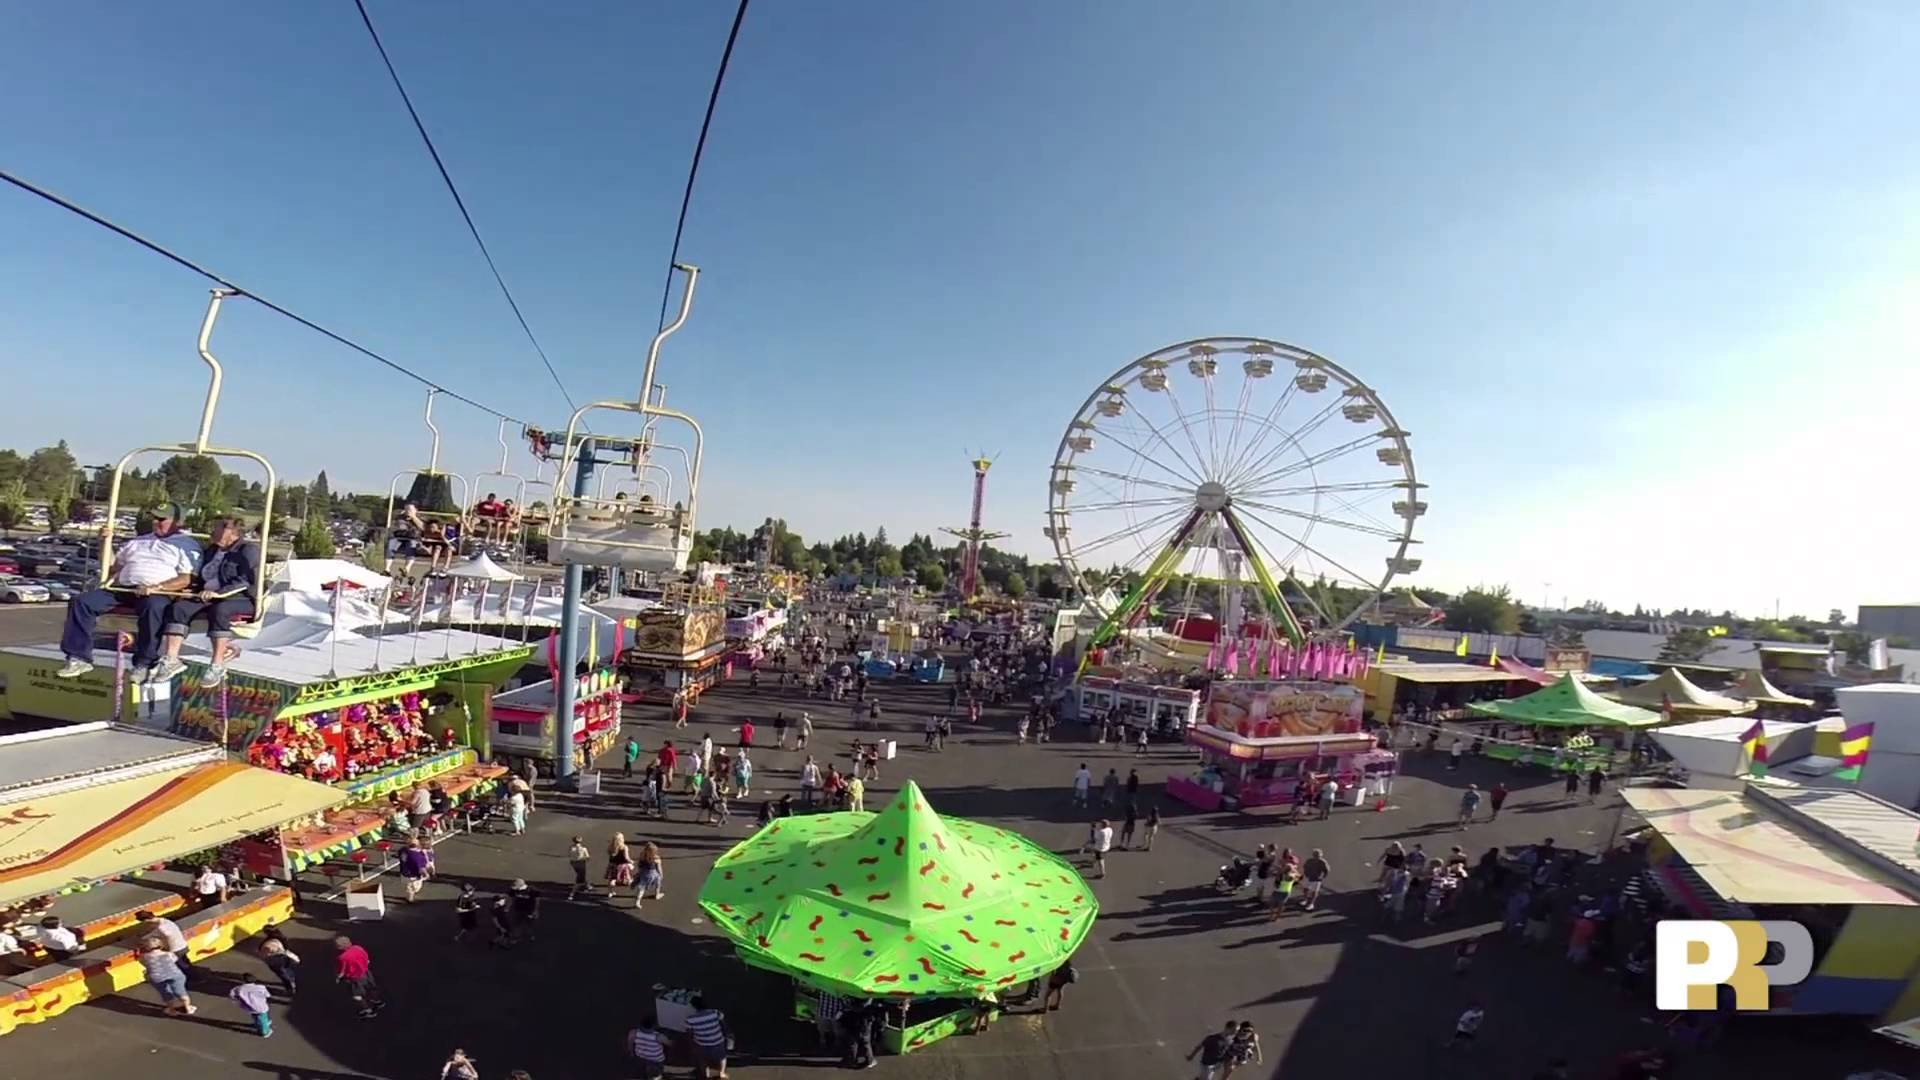 First state sponsored marijuana fair launches in Oregon